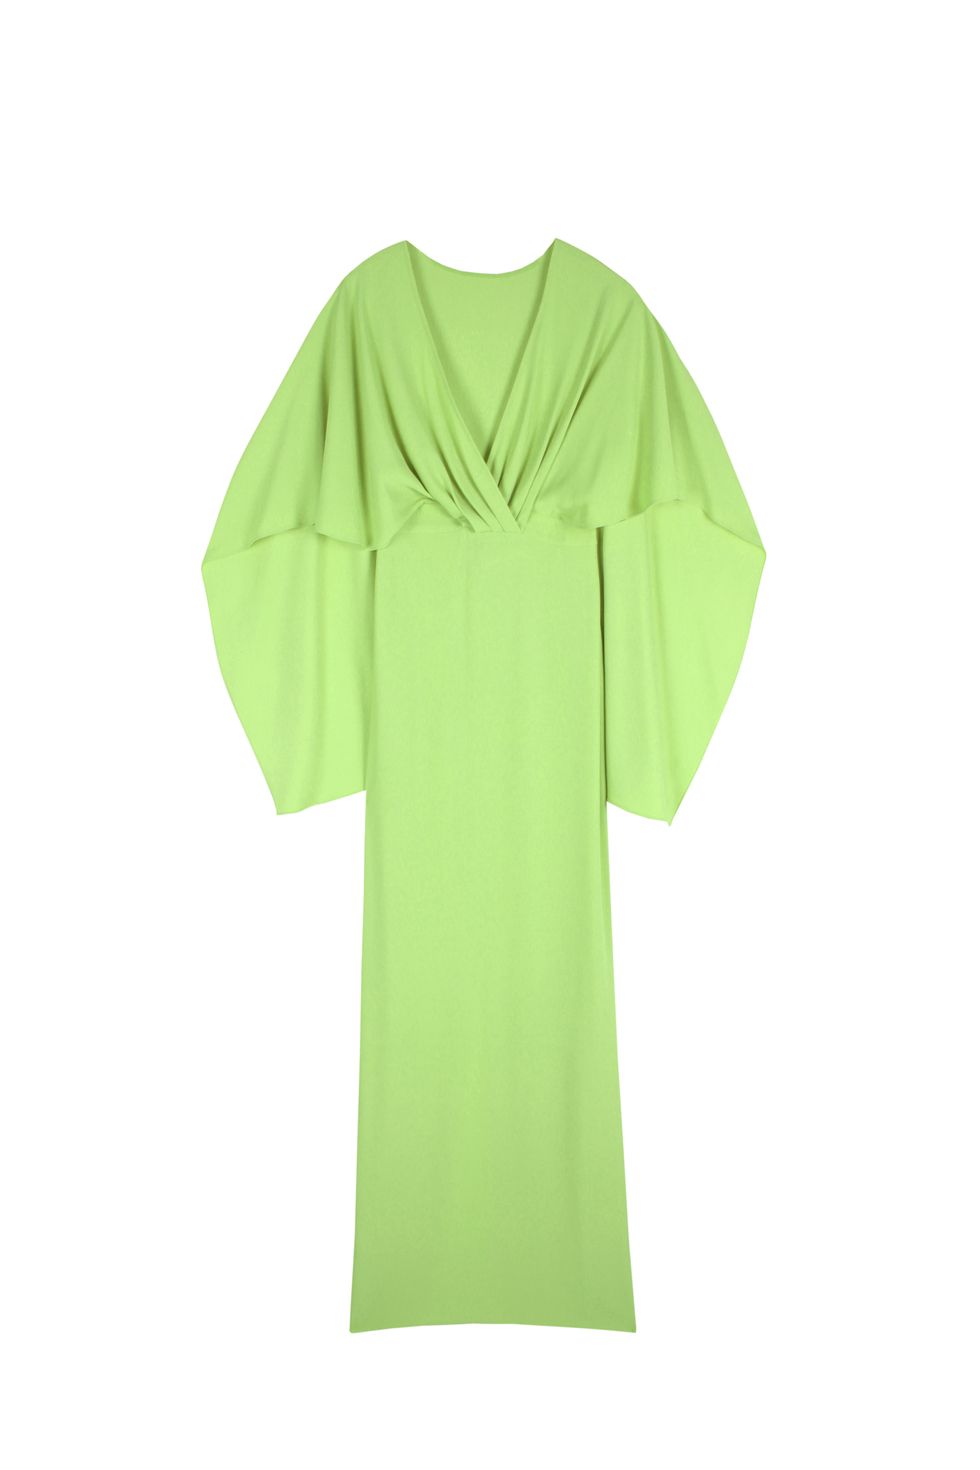 <p>Vestido tipo capa verde lima de la línea<strong> Heaven de&nbsp;Dolores Promesas.</strong></p>